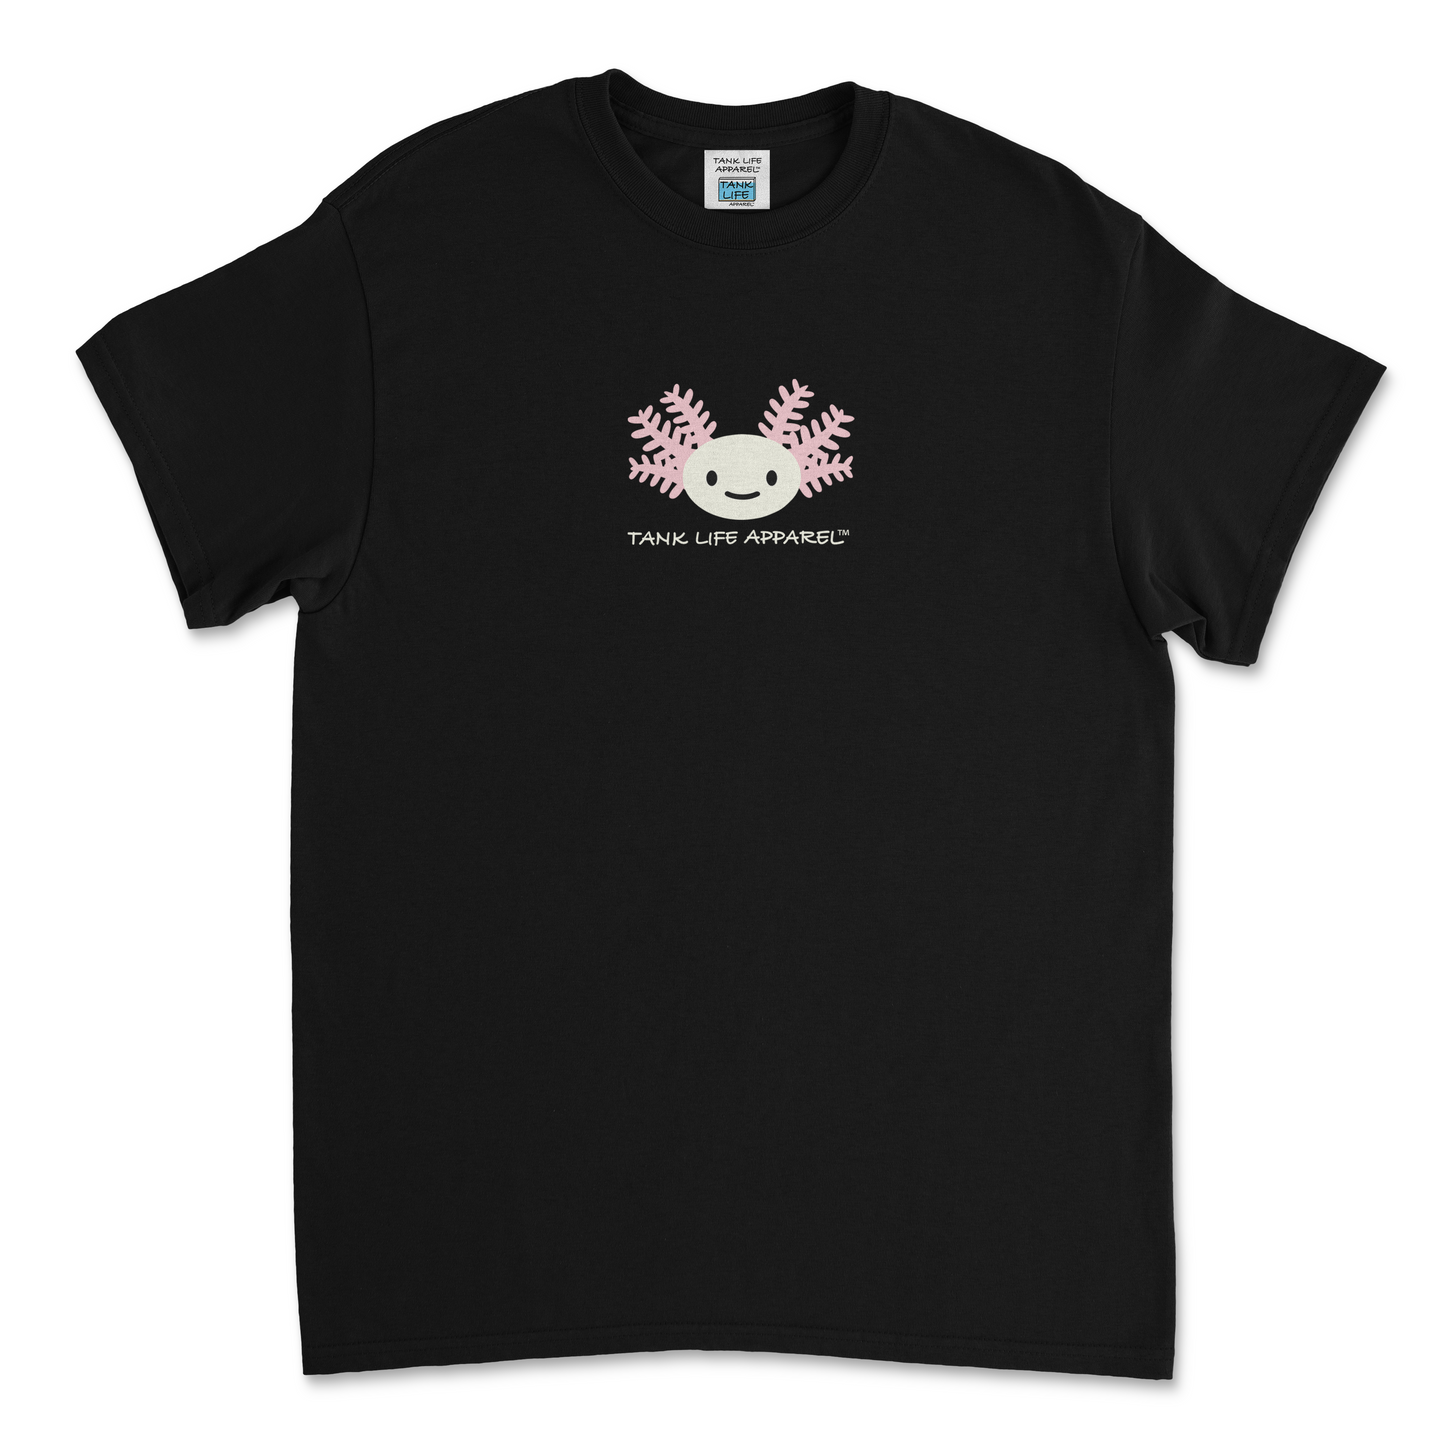  Tank Life Apparel axolotl design on a youth tee. This is a 100% preshrunk cotton black t-shirt.